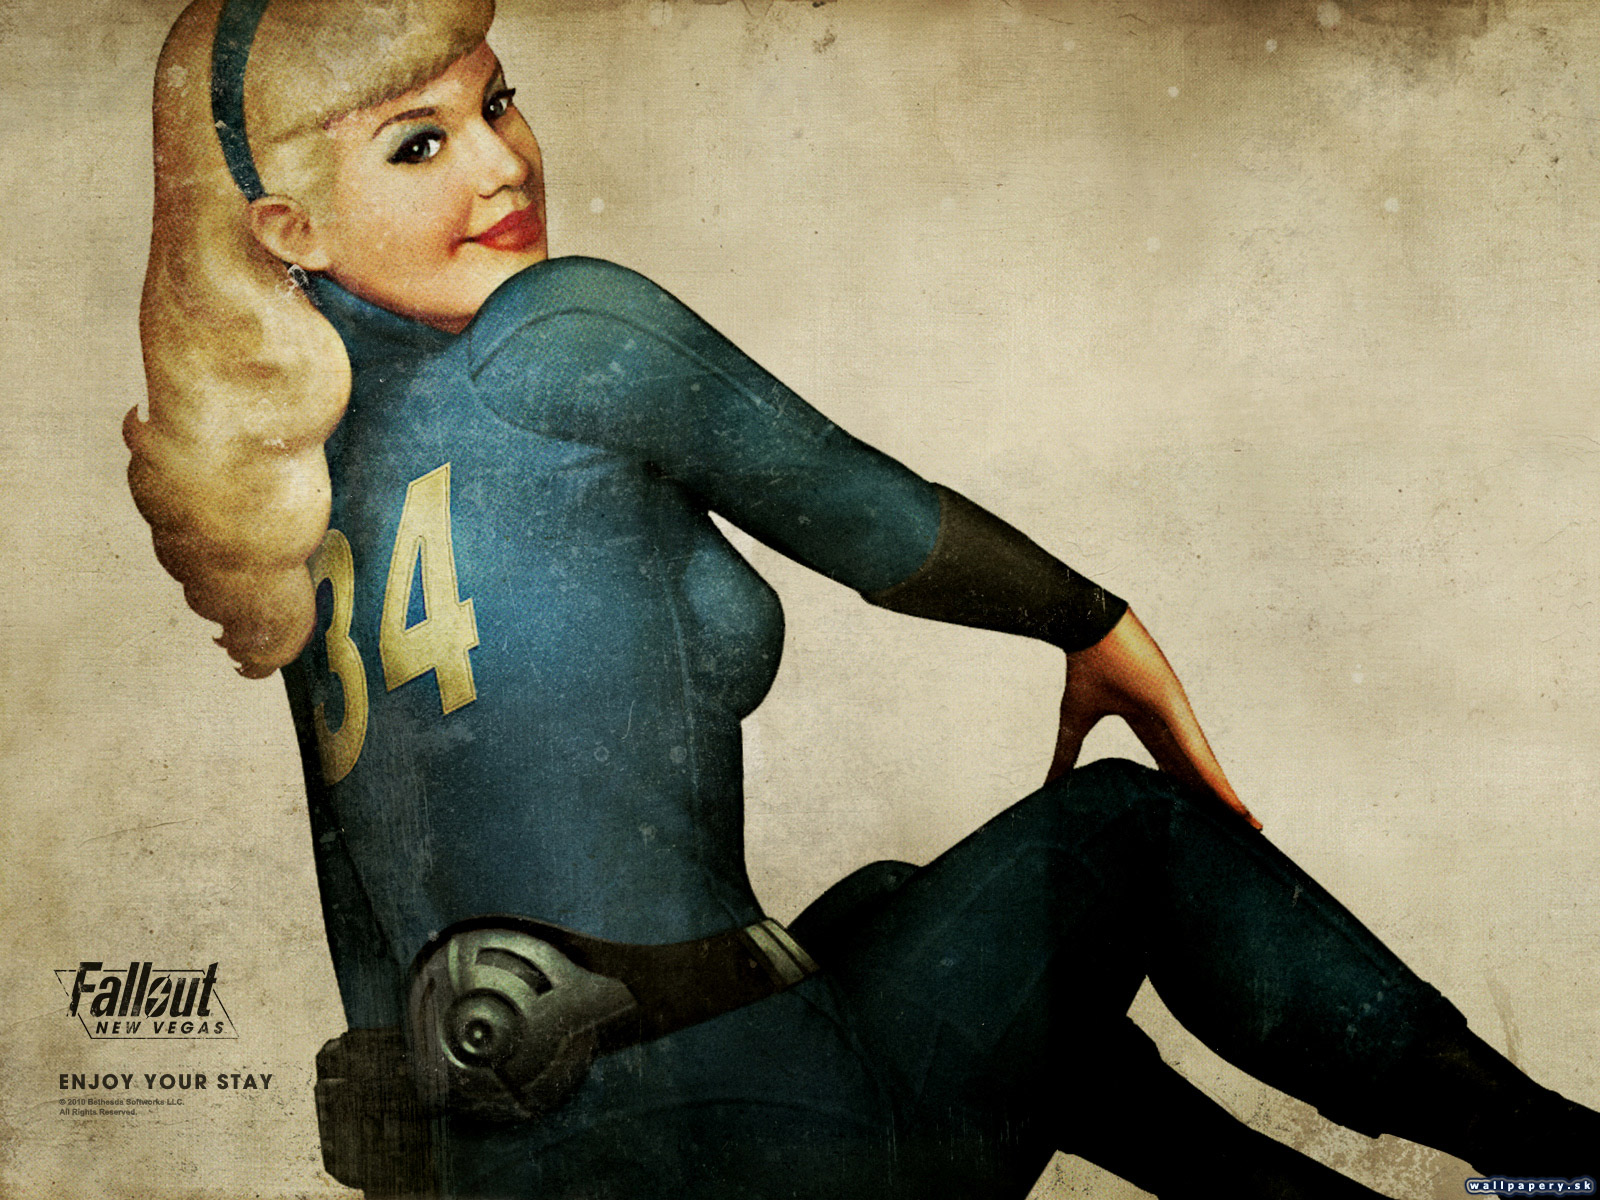 Fallout: New Vegas - wallpaper 20